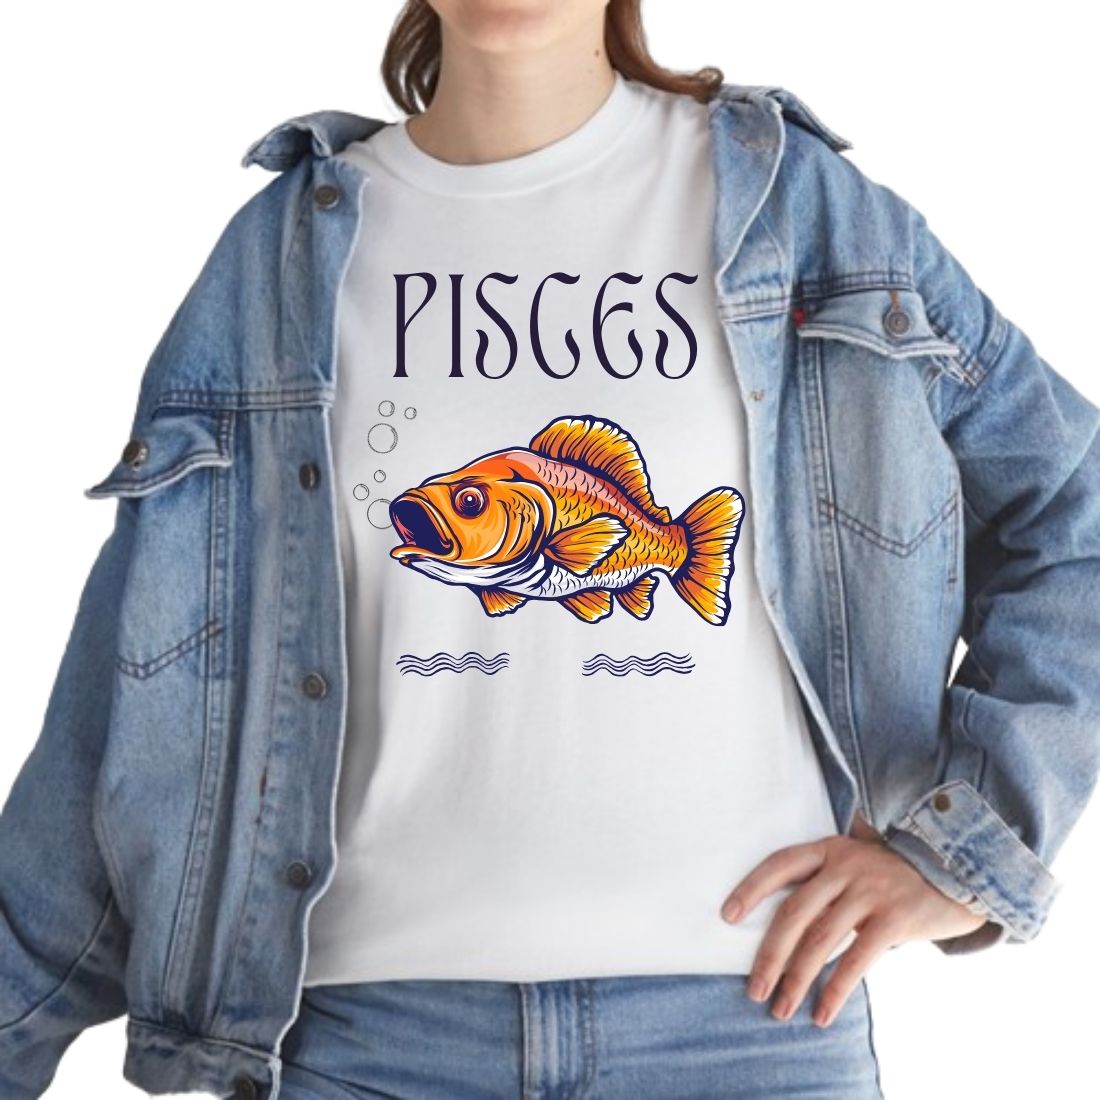 Pisces t-shirt design preview image.